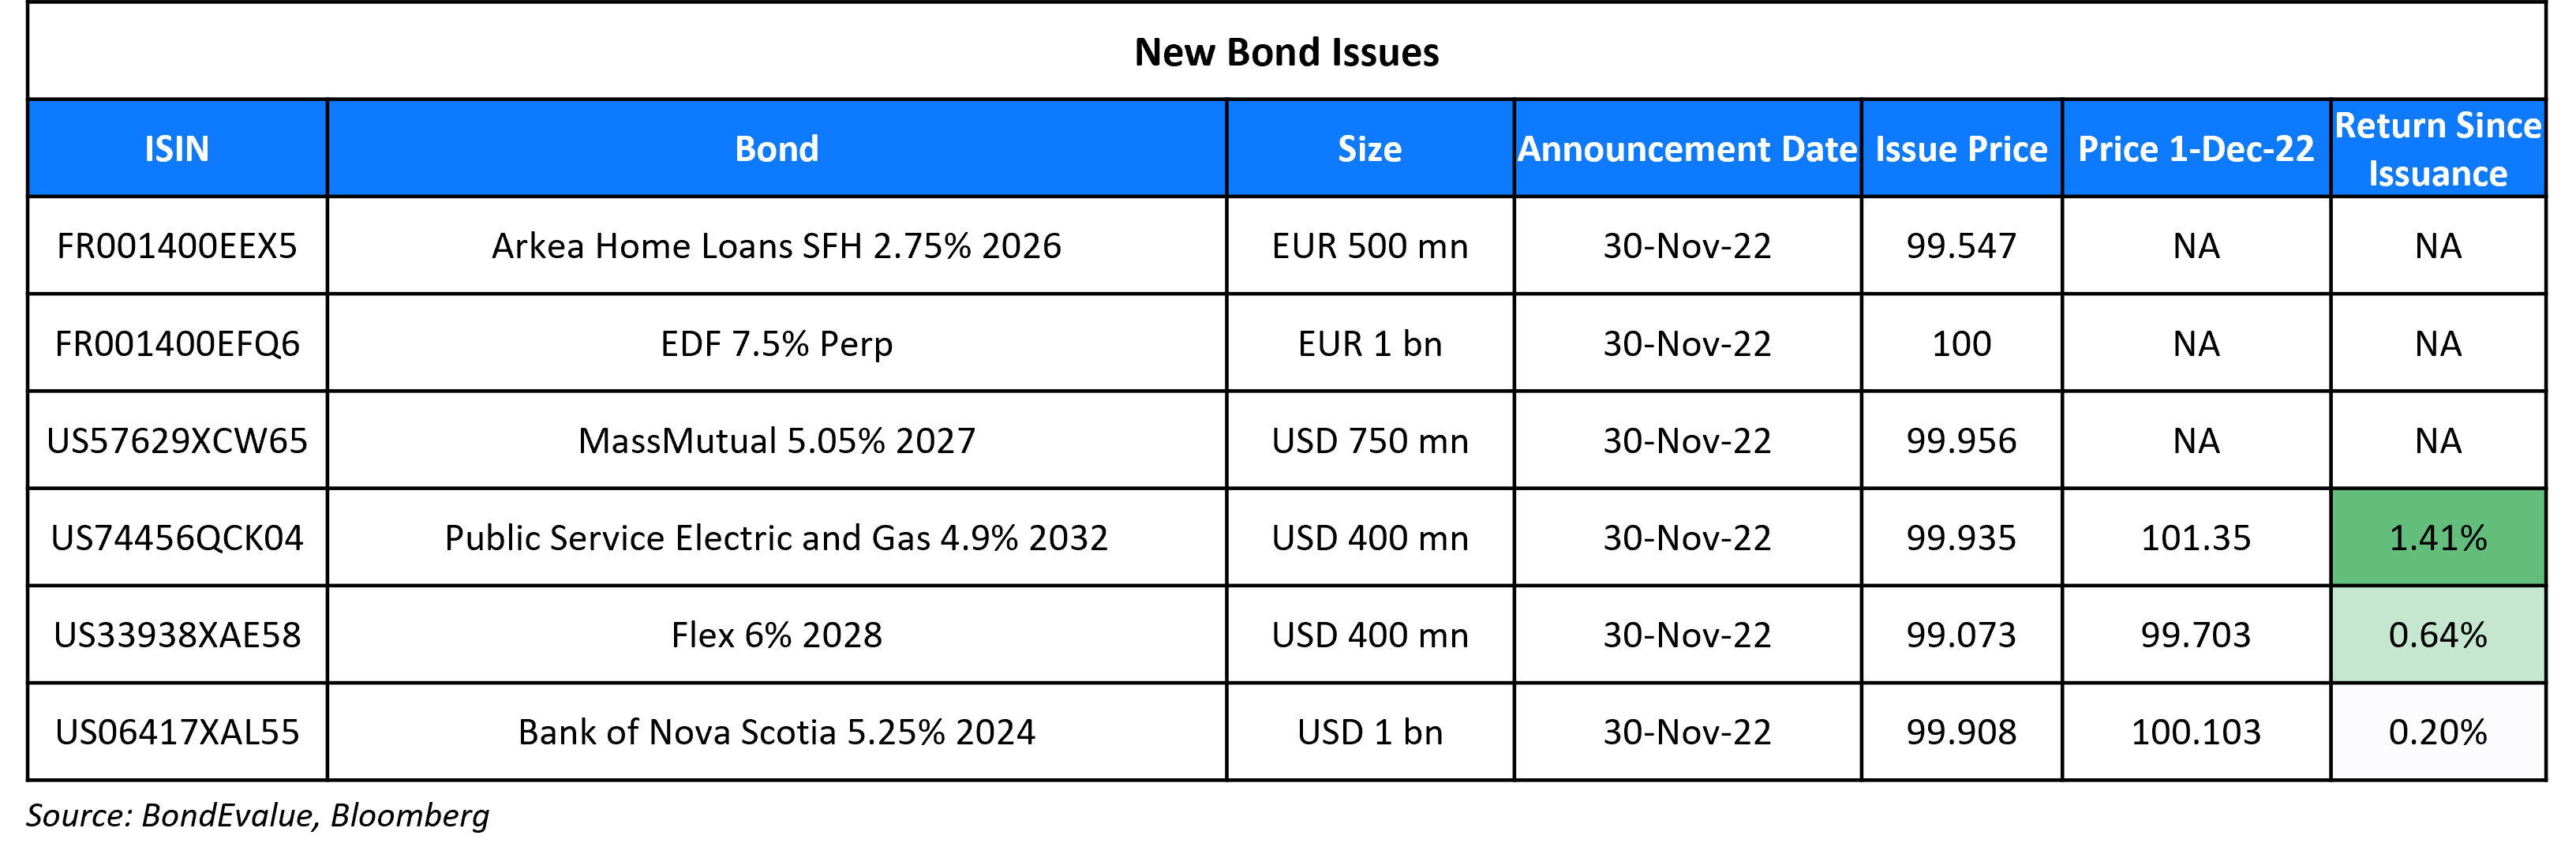 New Bond Issues 1 Dec 22